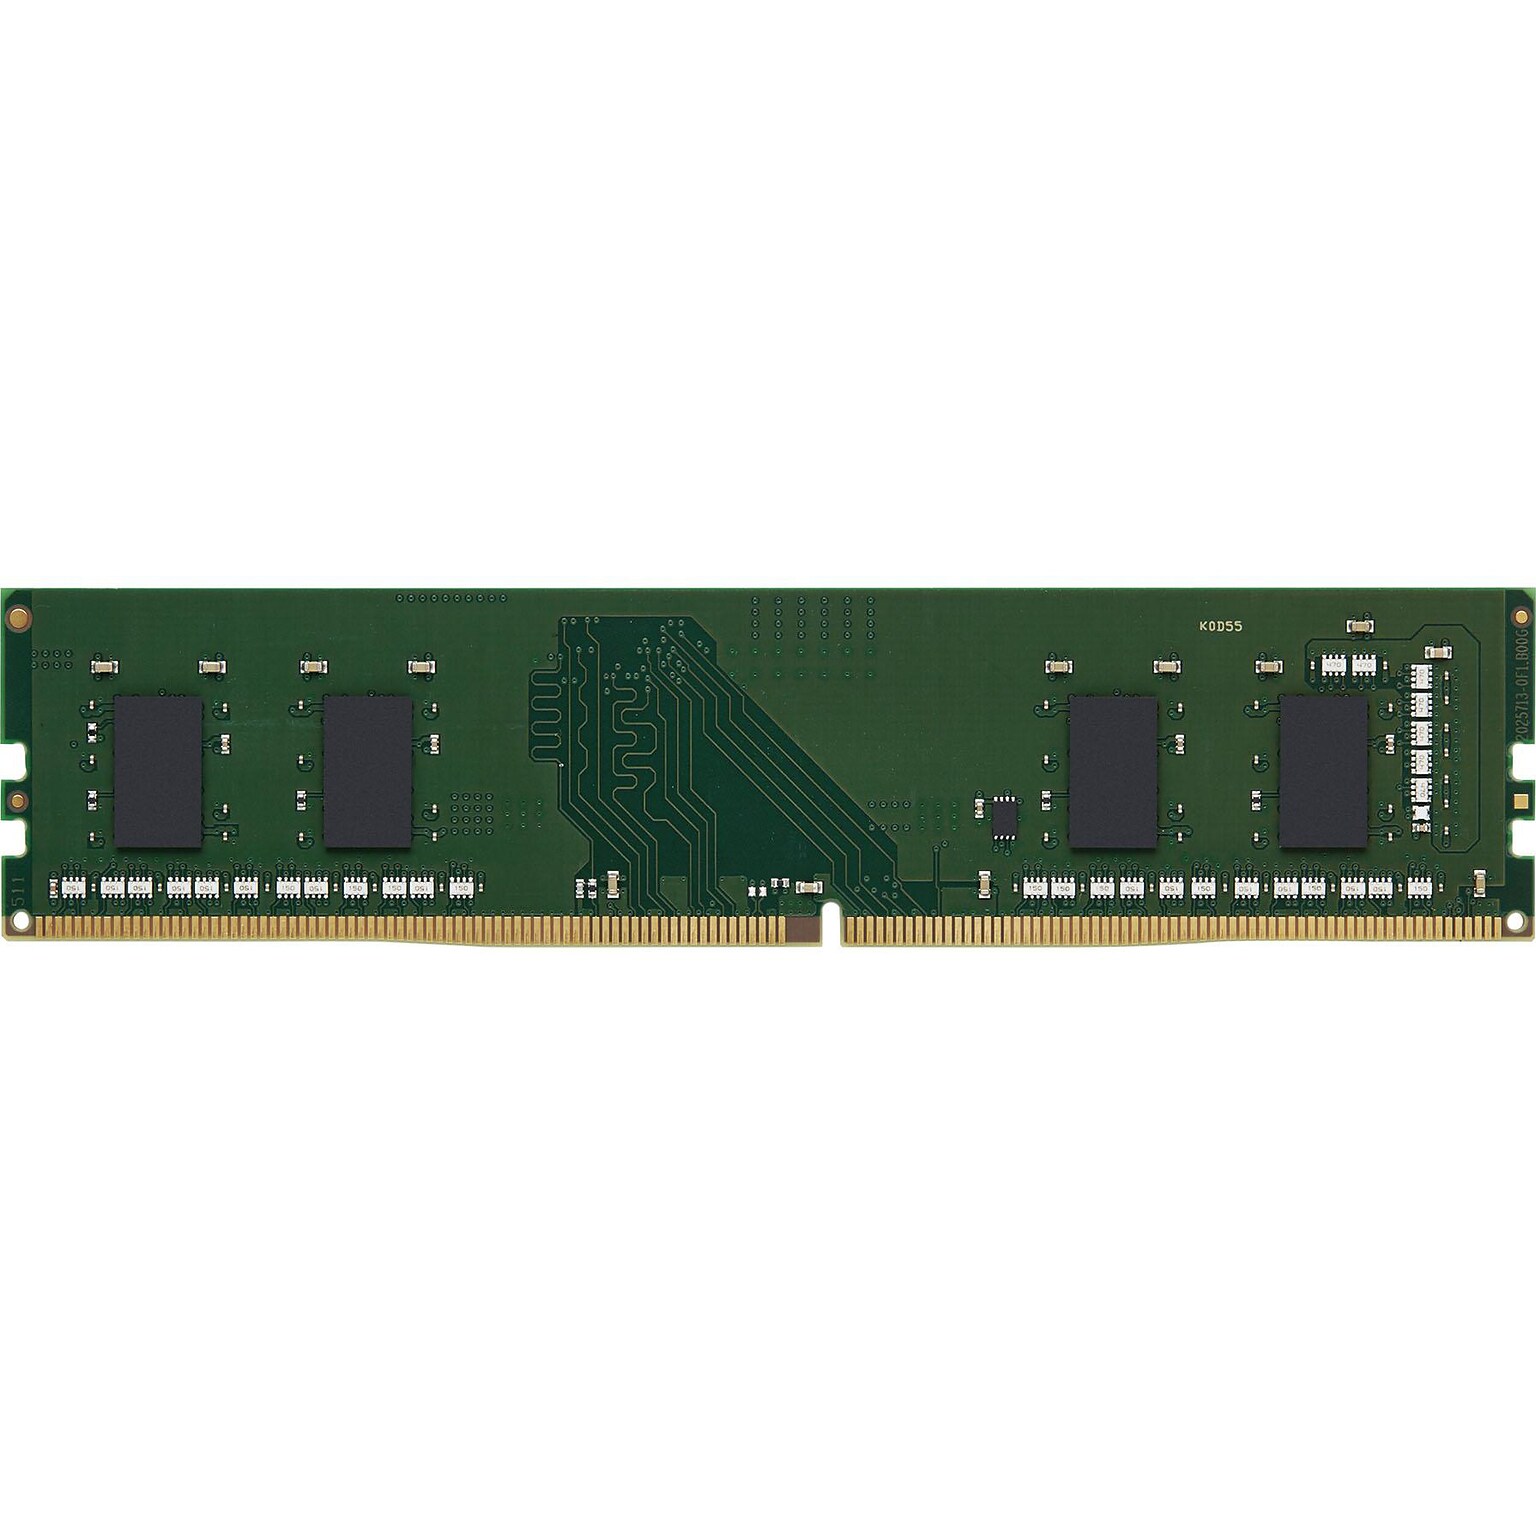 Kingston ValueRAM 4GB DDR4 UDIMM 288-pin SDRAM Memory (KVR26N19S6/4)